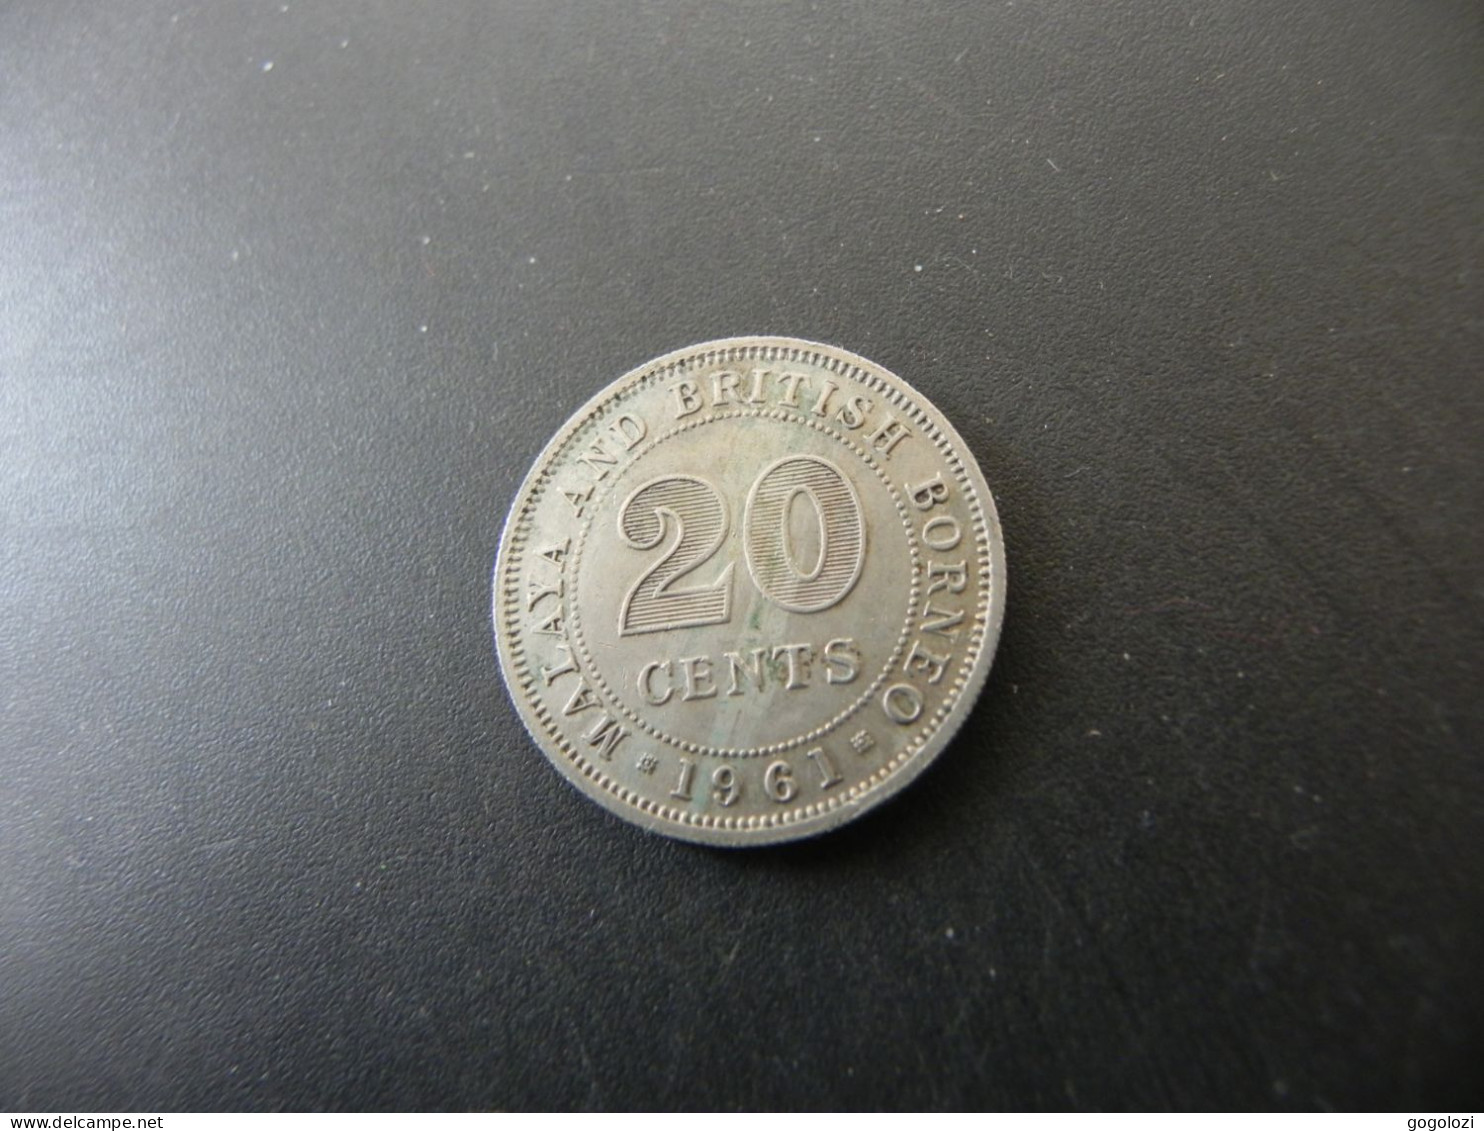 Malaya And British Borneo 20 Cents 1961 - Malaysia